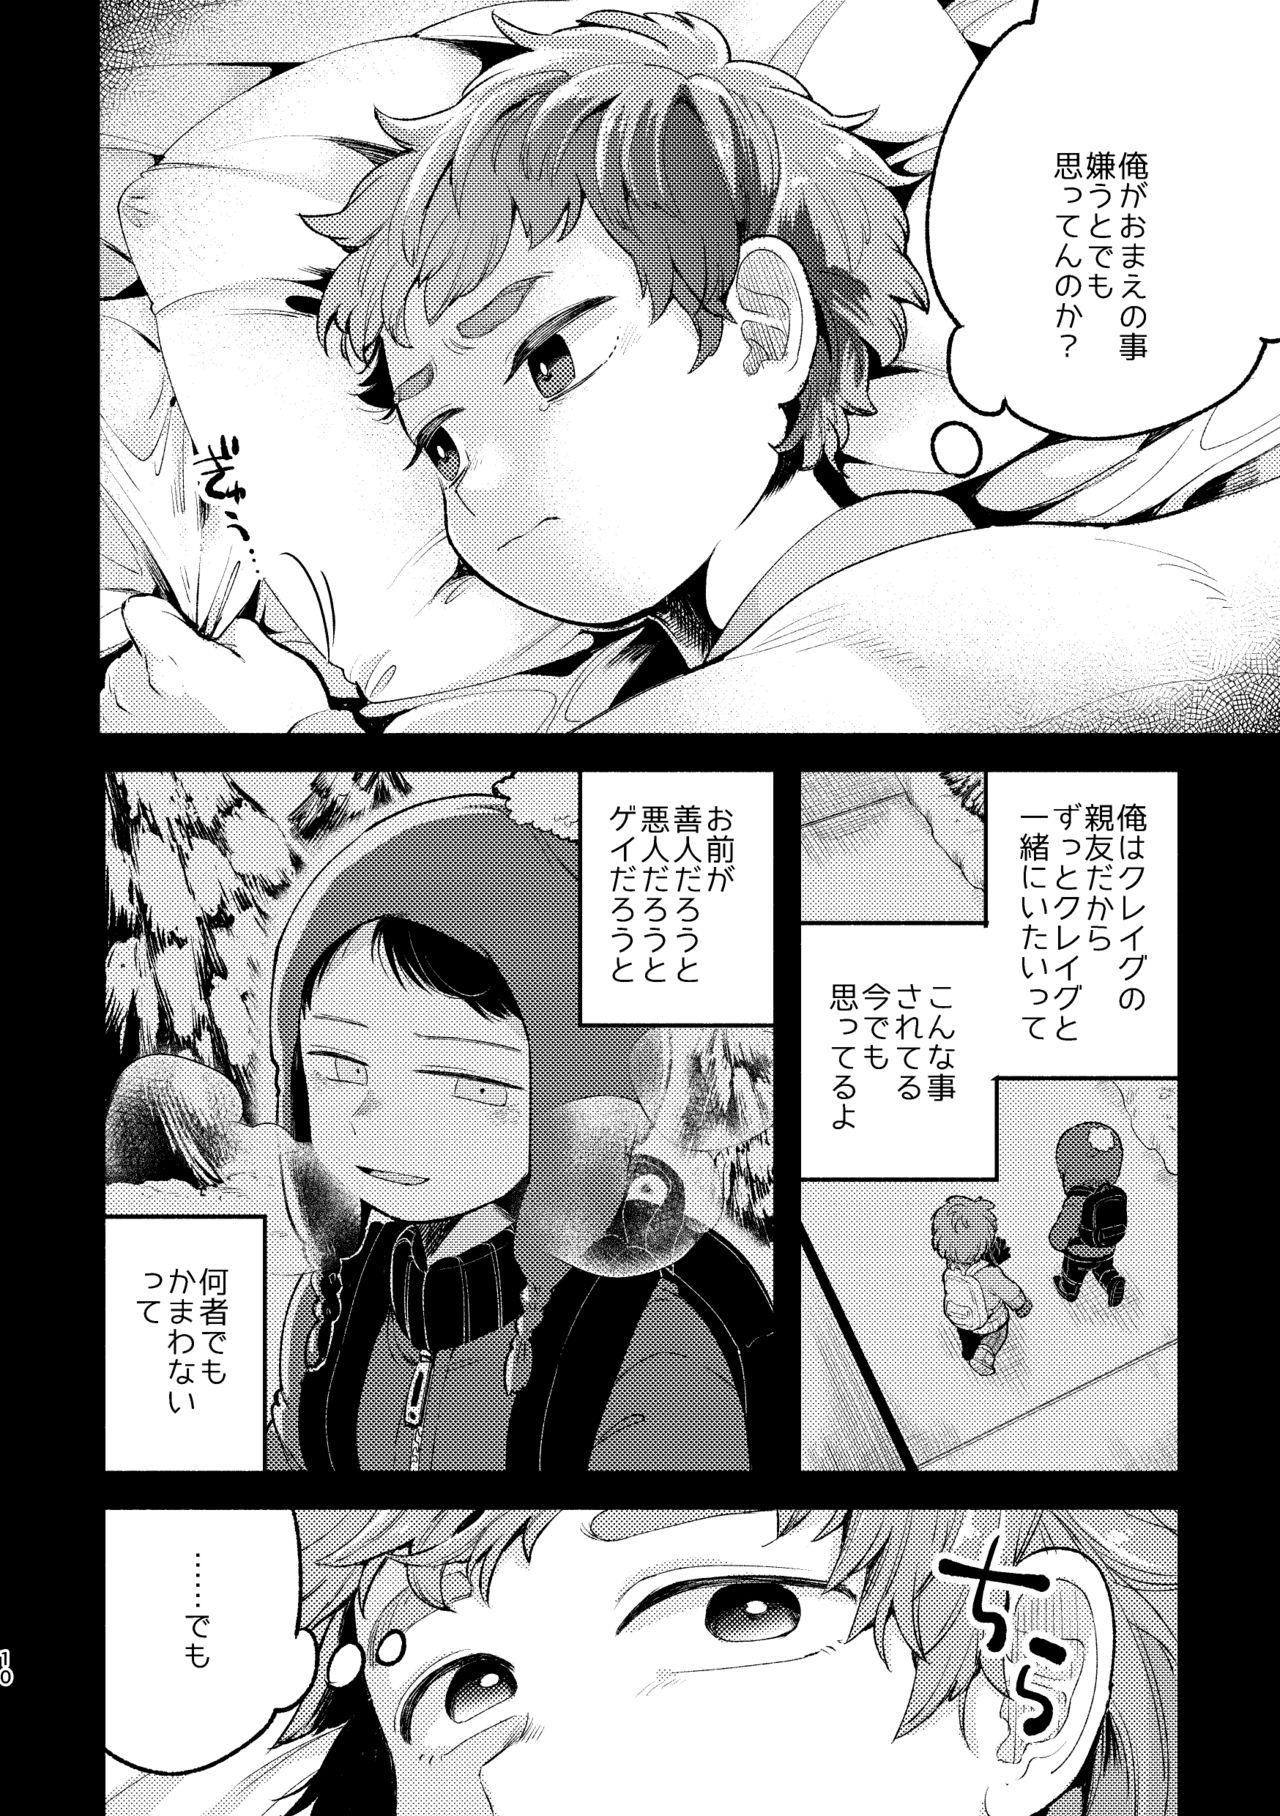 Bondagesex Sayonara Tomodachi - South park Blackwoman - Page 8